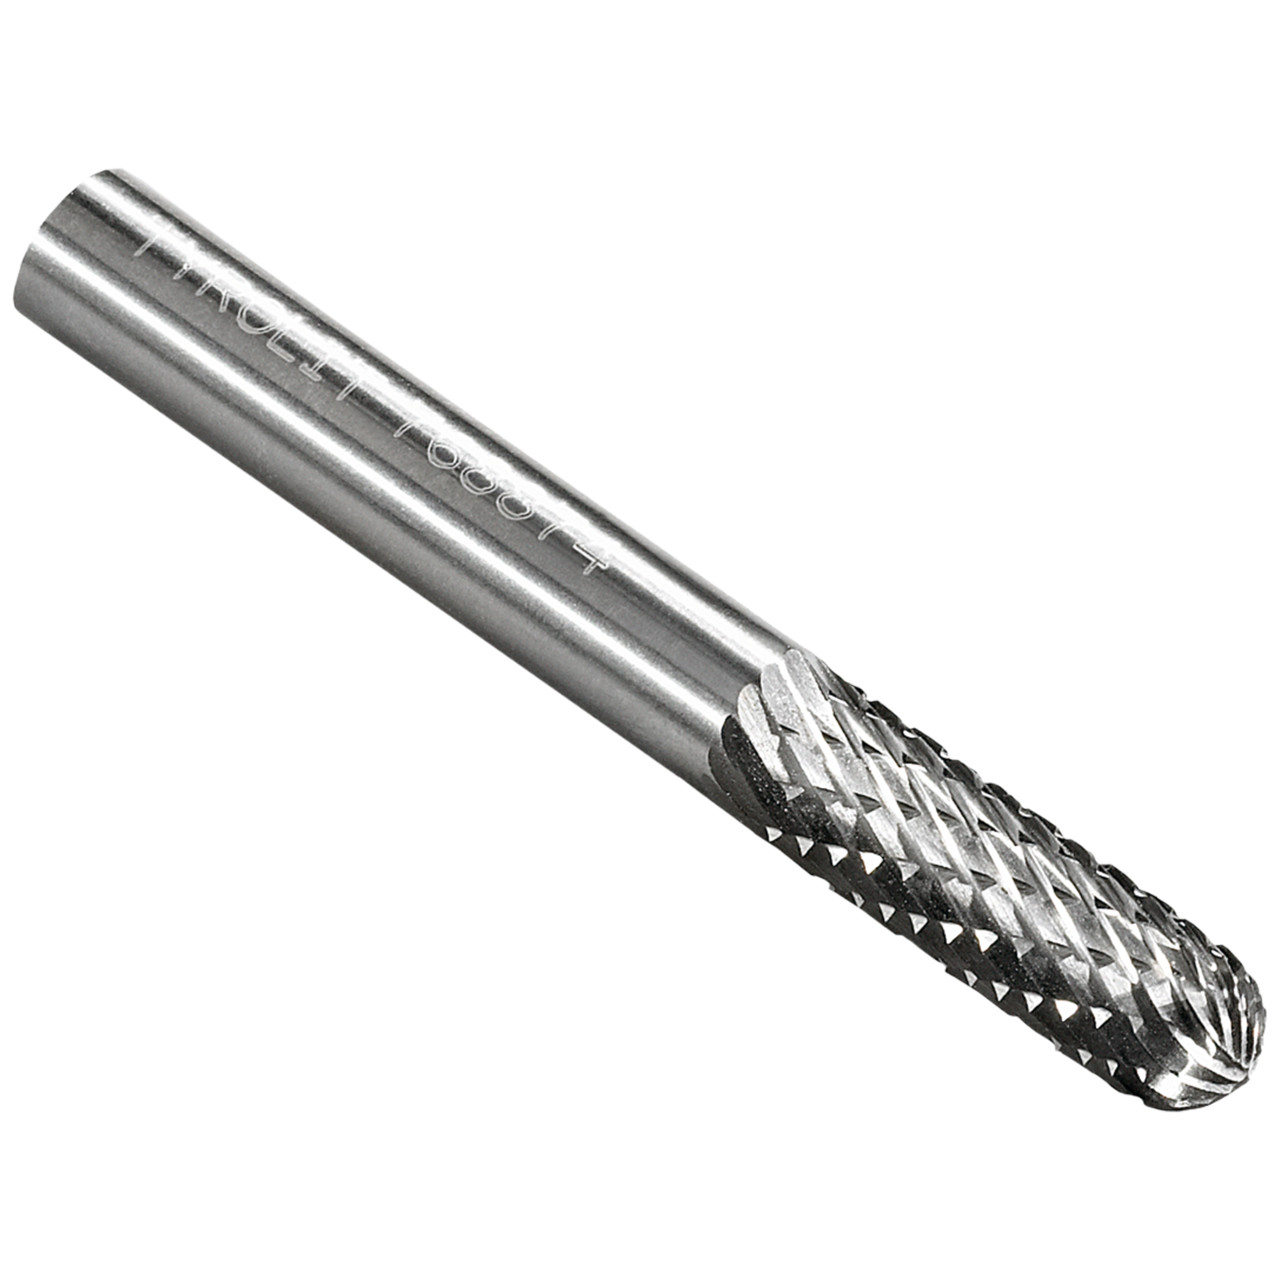 Fresa in metallo duro TYROLIT DxT-SxL 3x13-3x38 Per ghisa, acciaio e acciaio inox, forma: 52WRC - cilindrica, Art. 766126